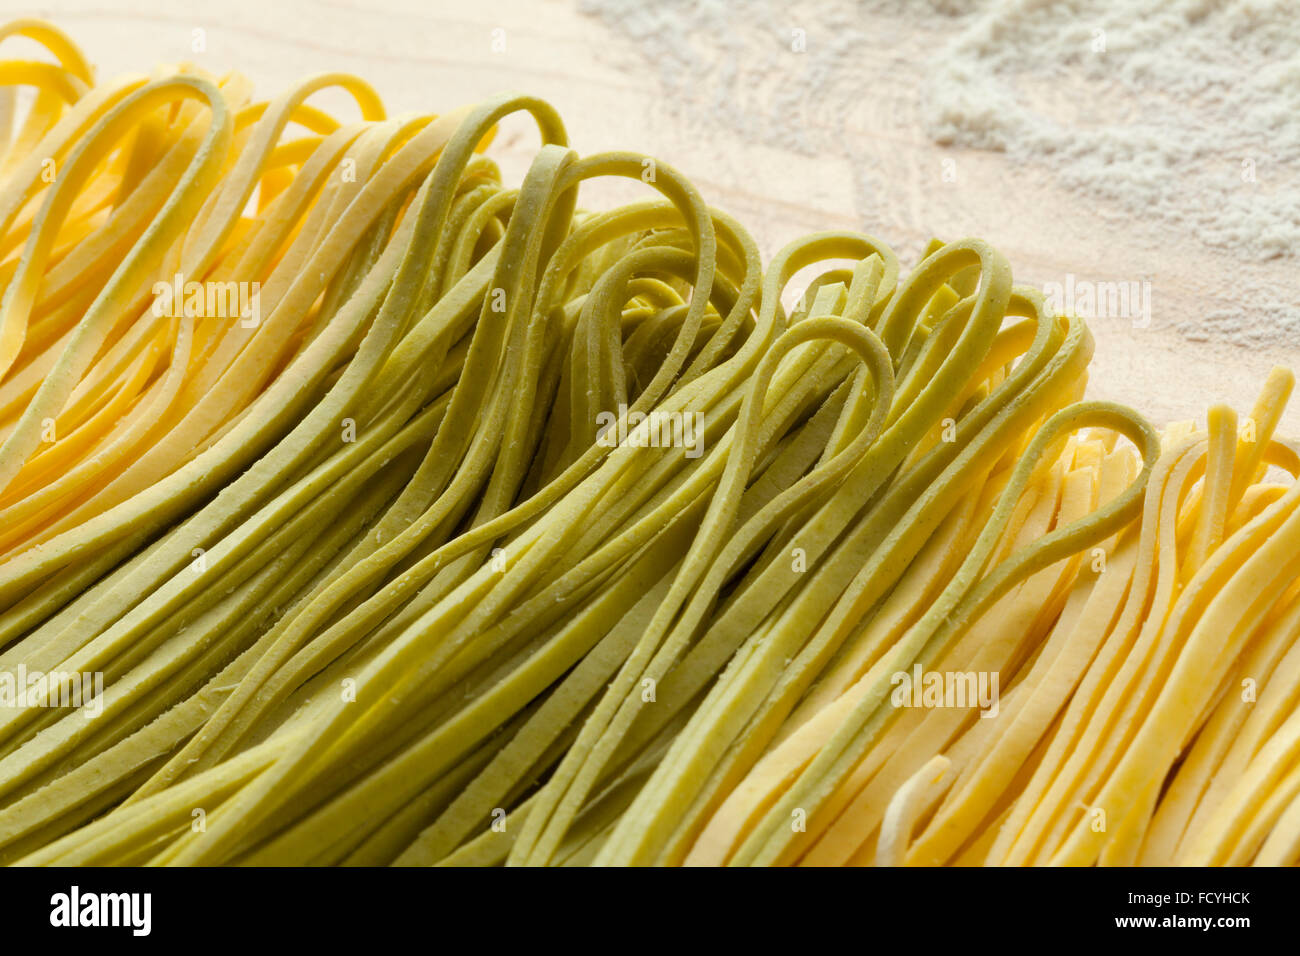 https://c8.alamy.com/comp/FCYHCK/fresh-tagliolini-bicolore-pasta-close-up-FCYHCK.jpg